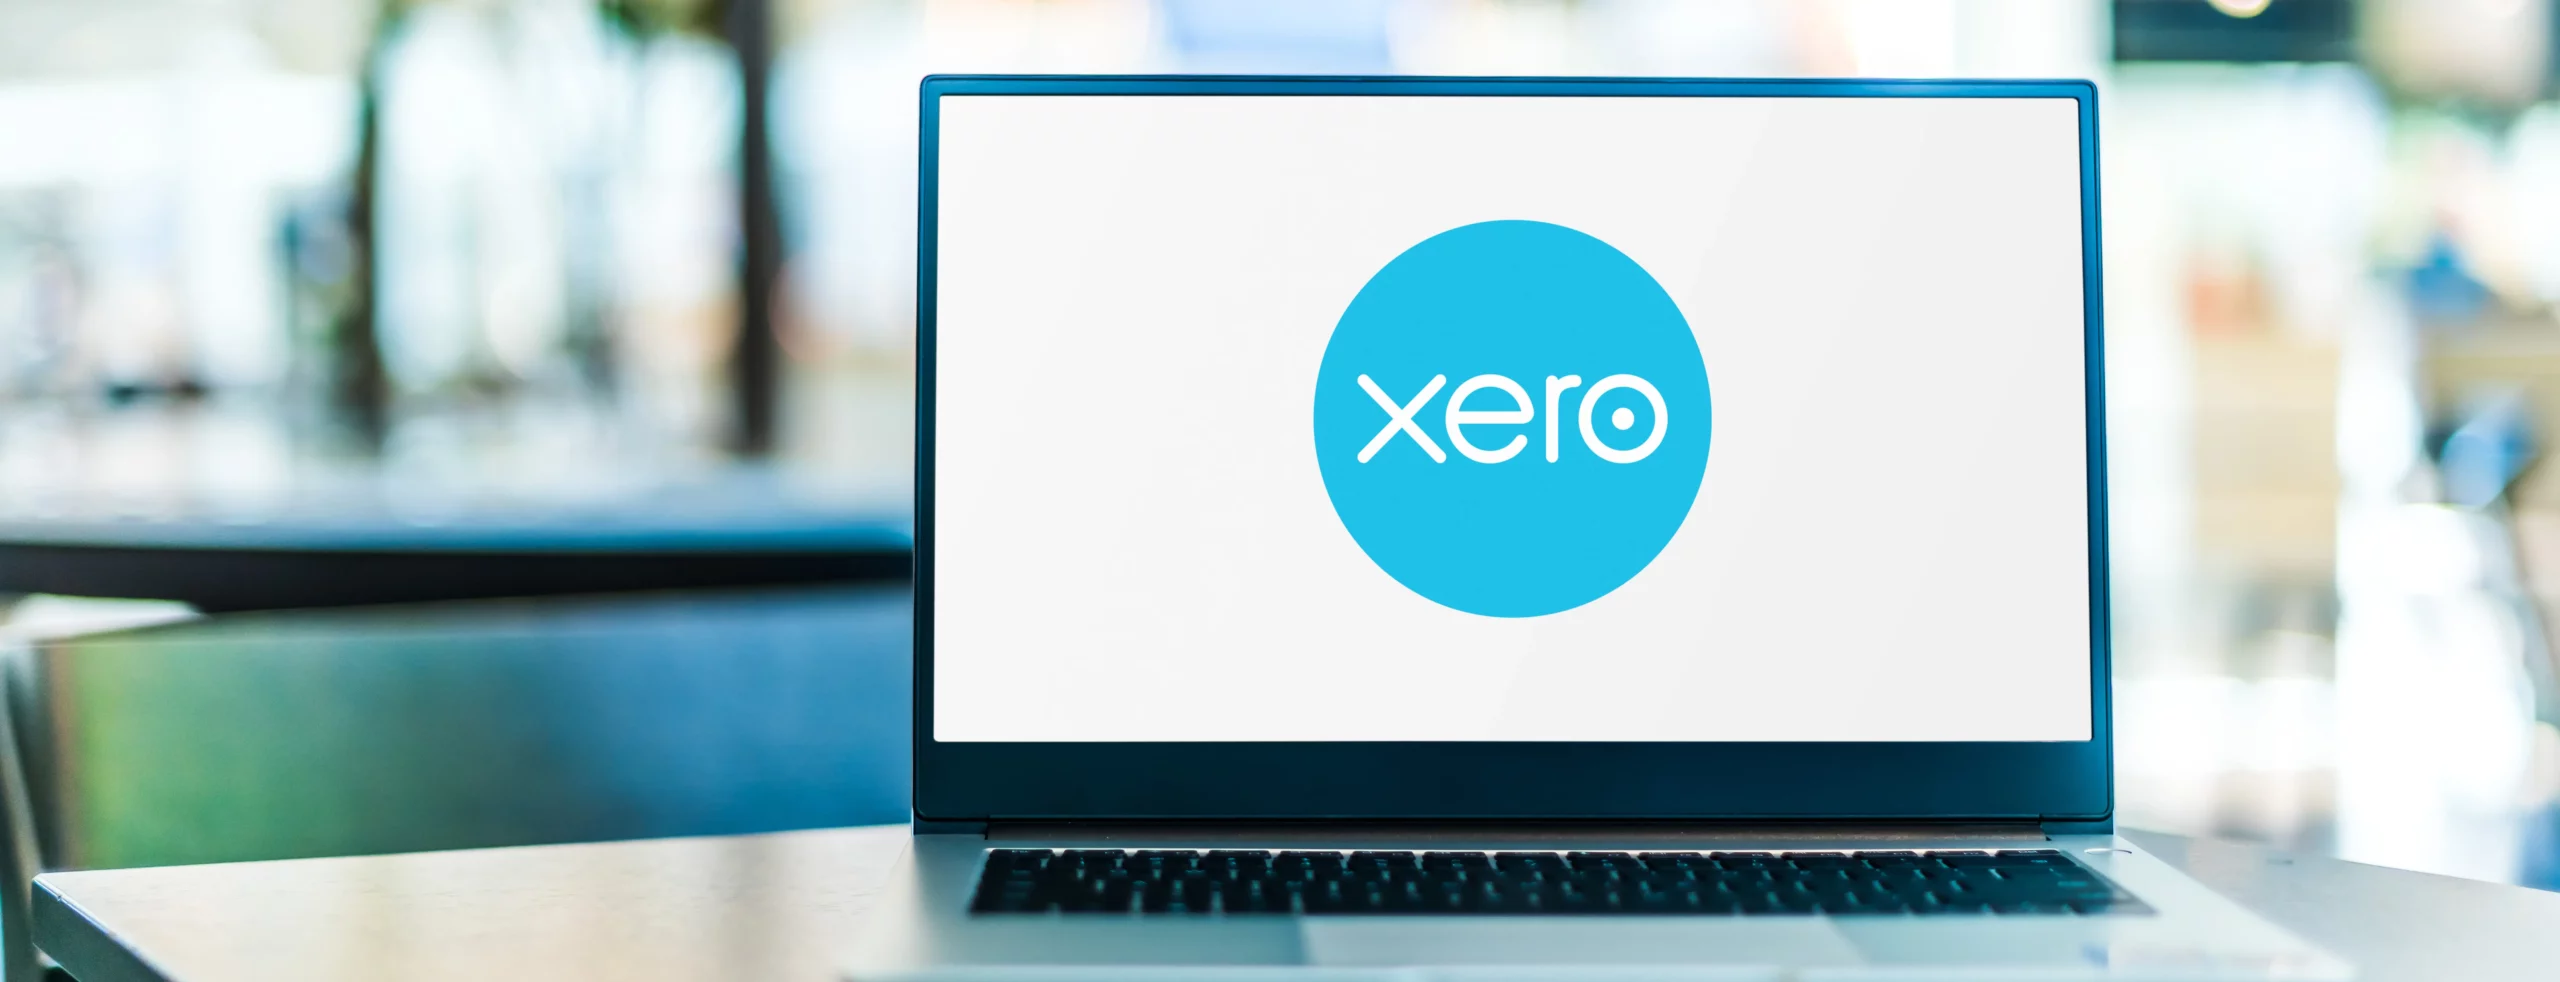 Xero Software